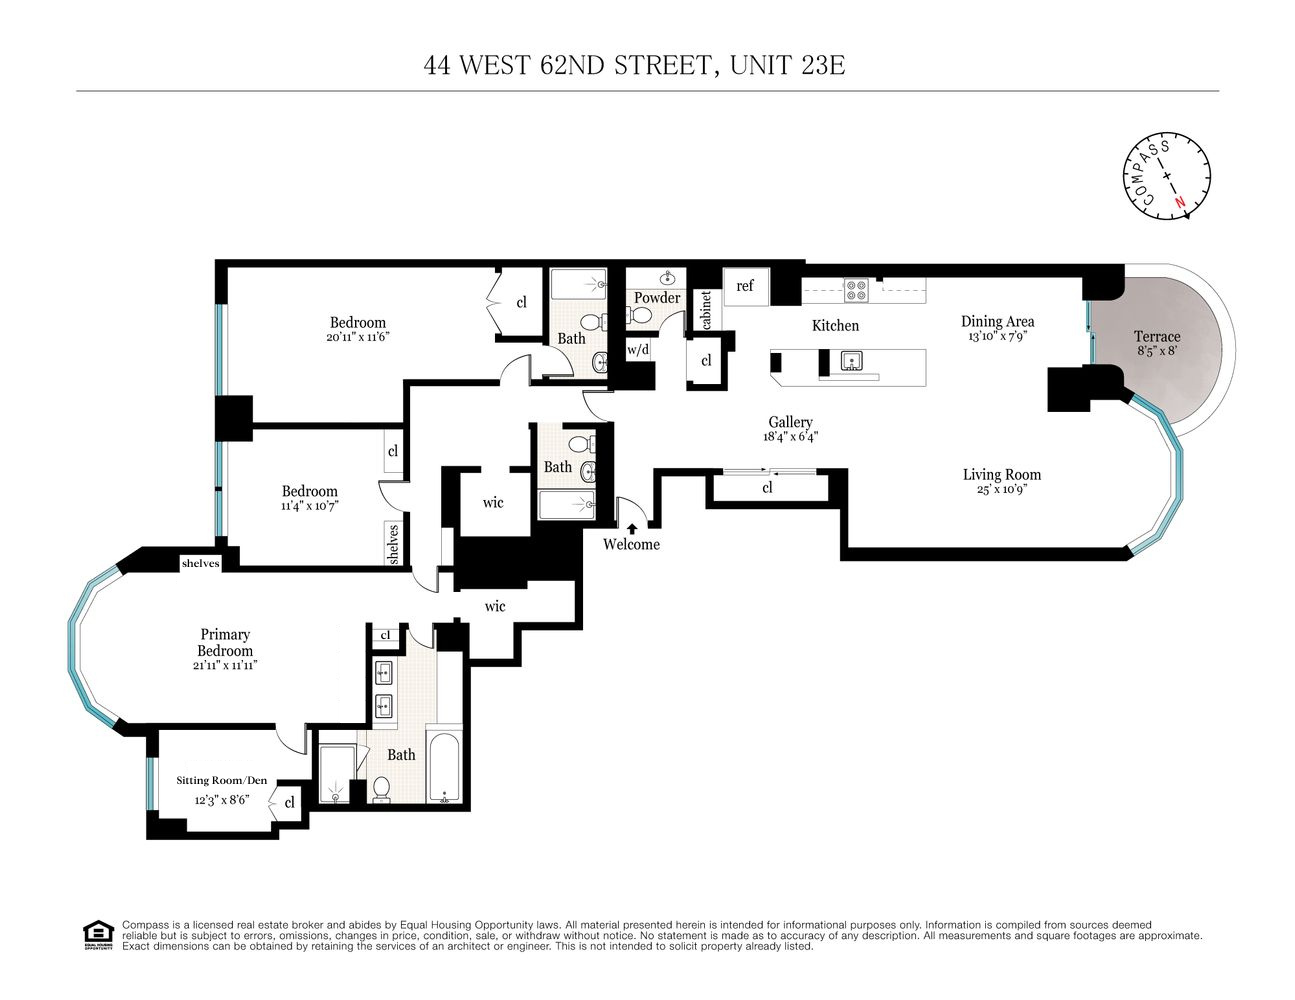 Floorplan for 44 West 62nd Street, 23E